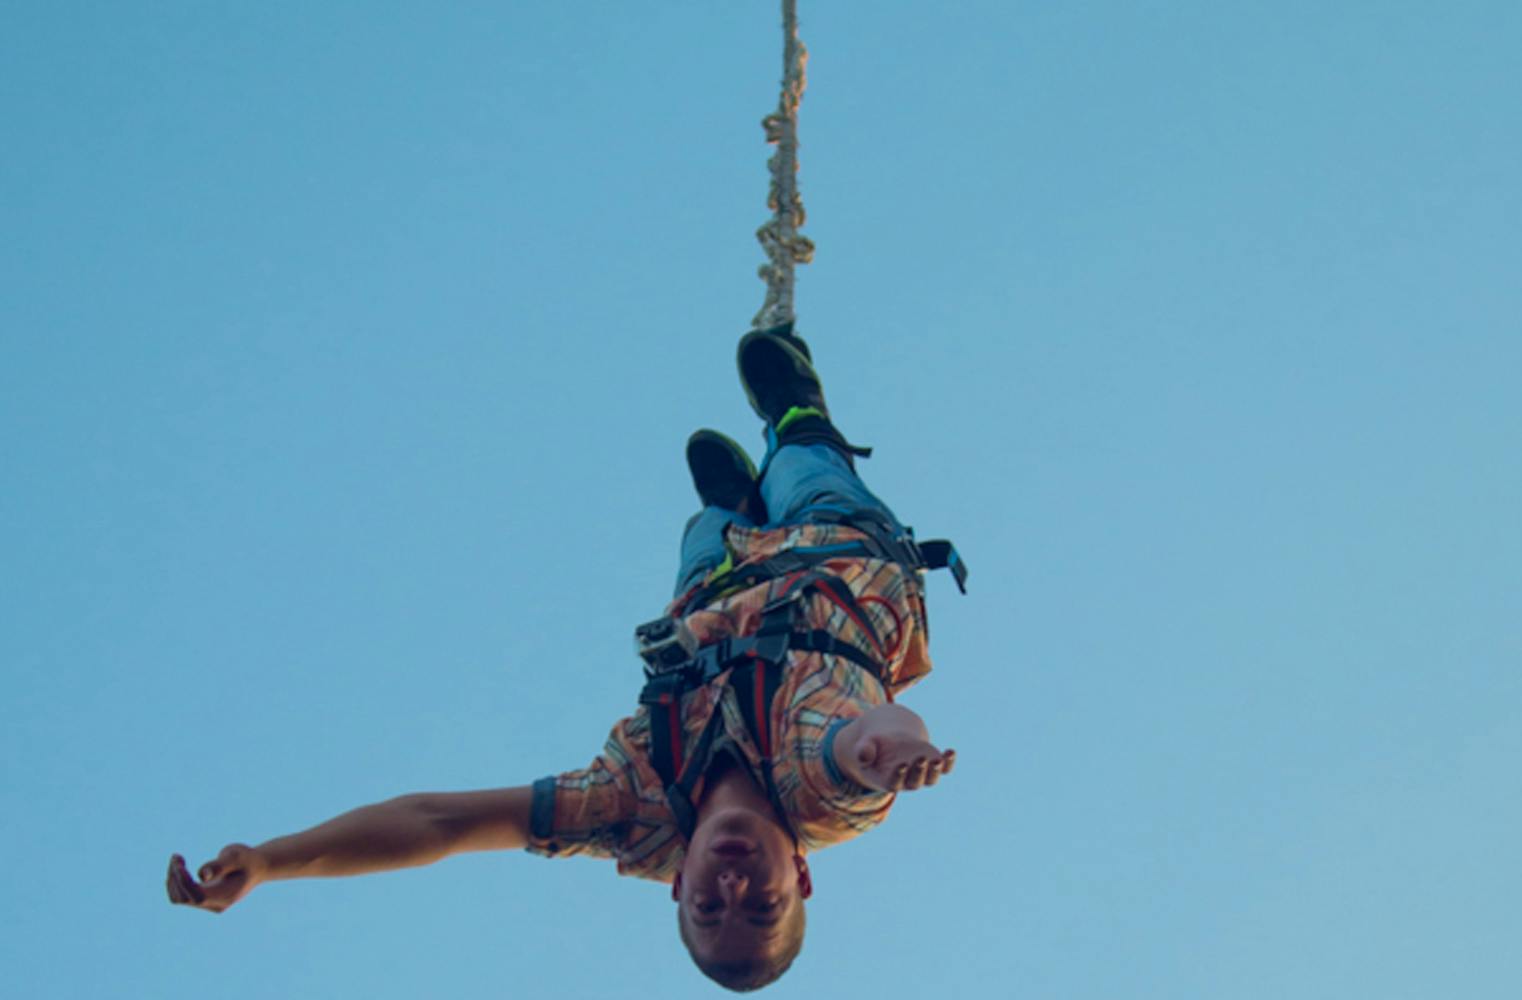 Bungee Jumping | freier Fall aus 50 Meter Höhe